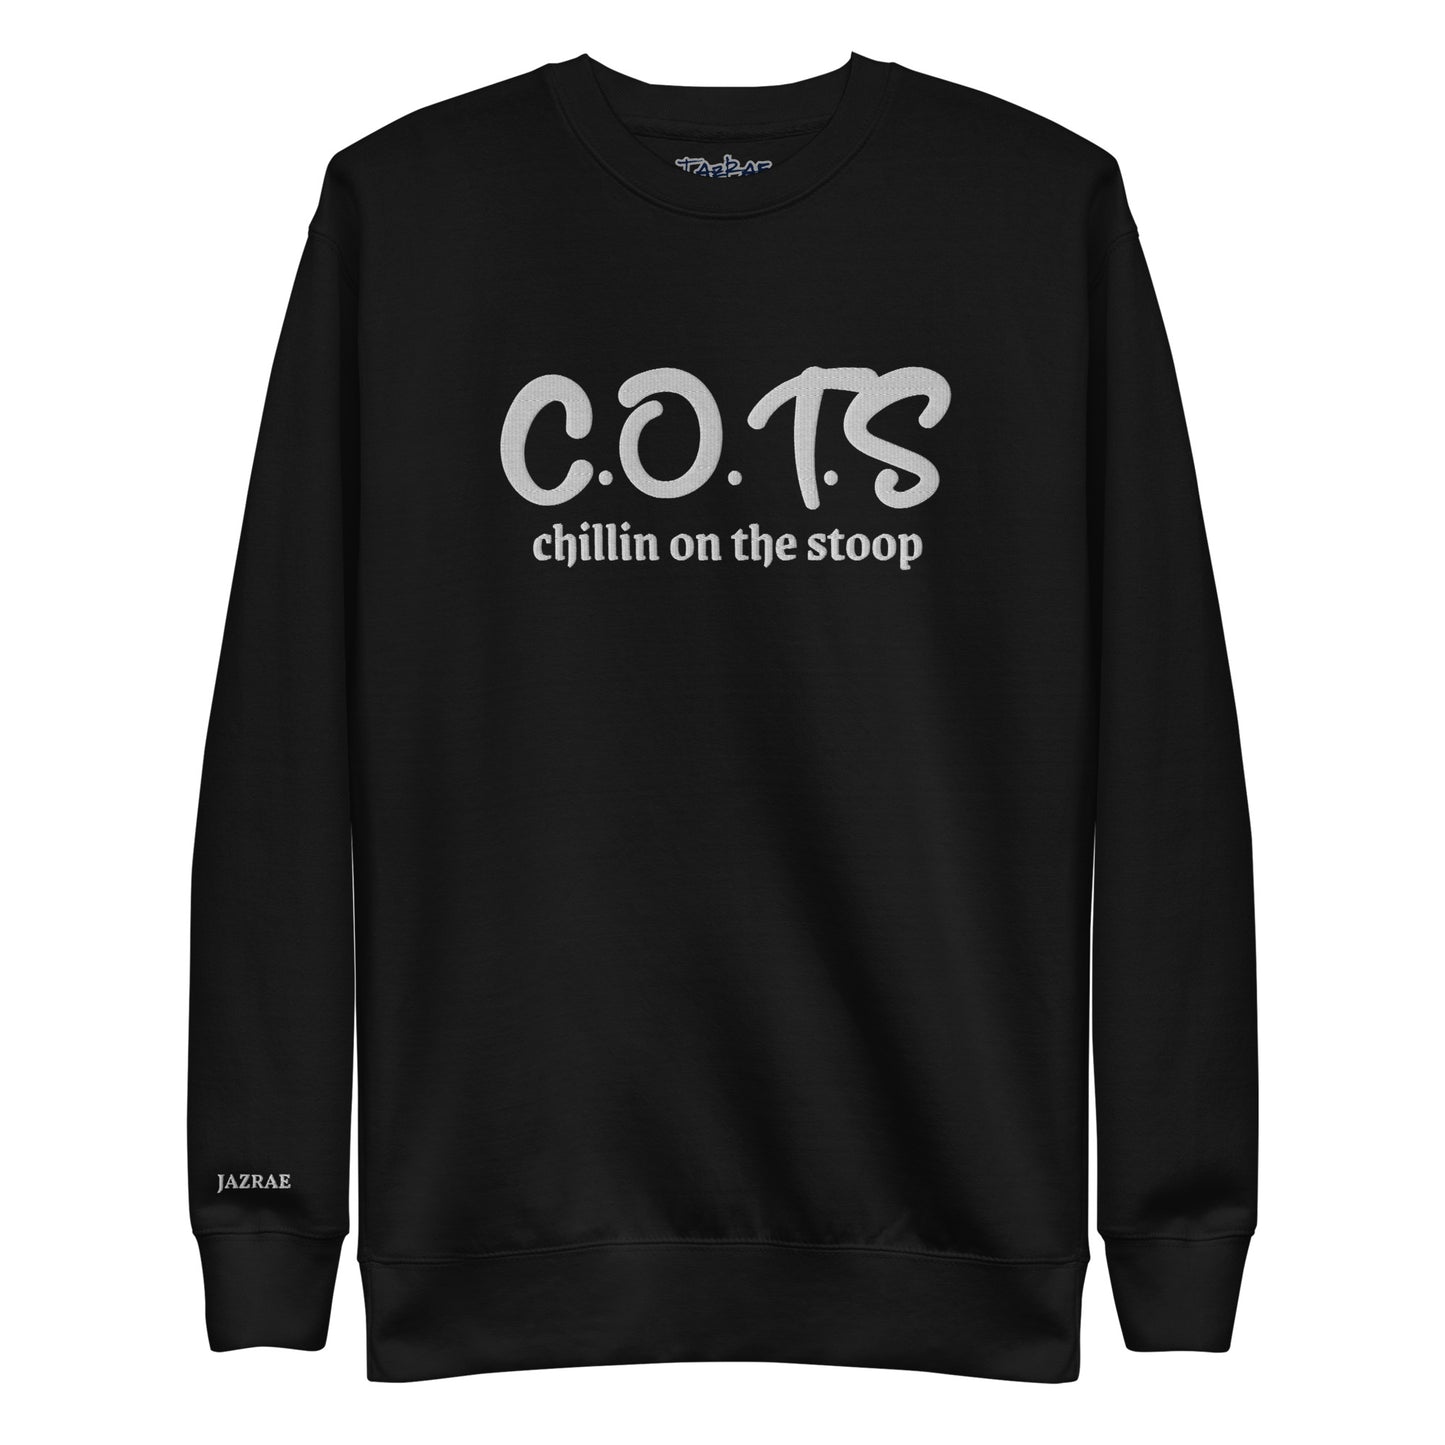 C.O.T.S CHILLIN ON THE STOOP Stitched  Unisex Premium Sweatshirt